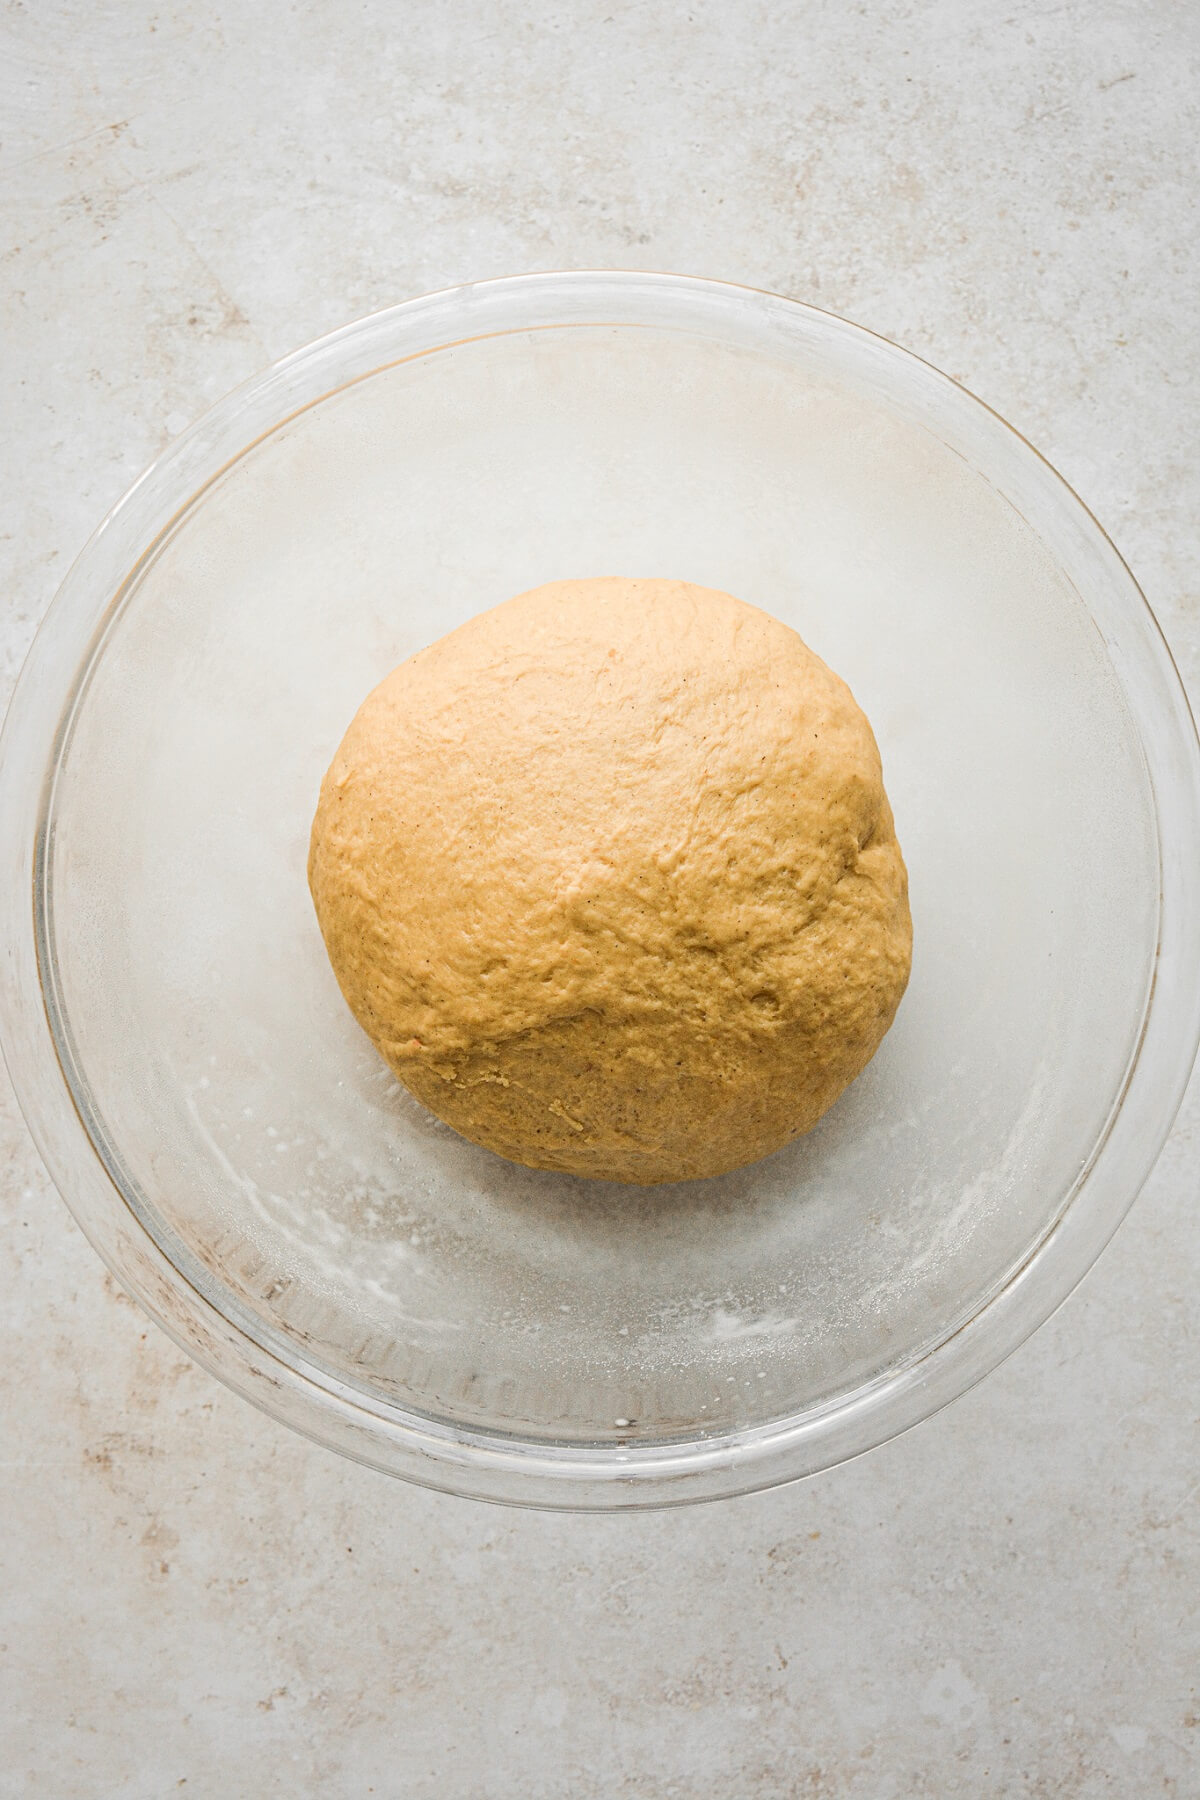 Pumpkin roll dough in a bowl.